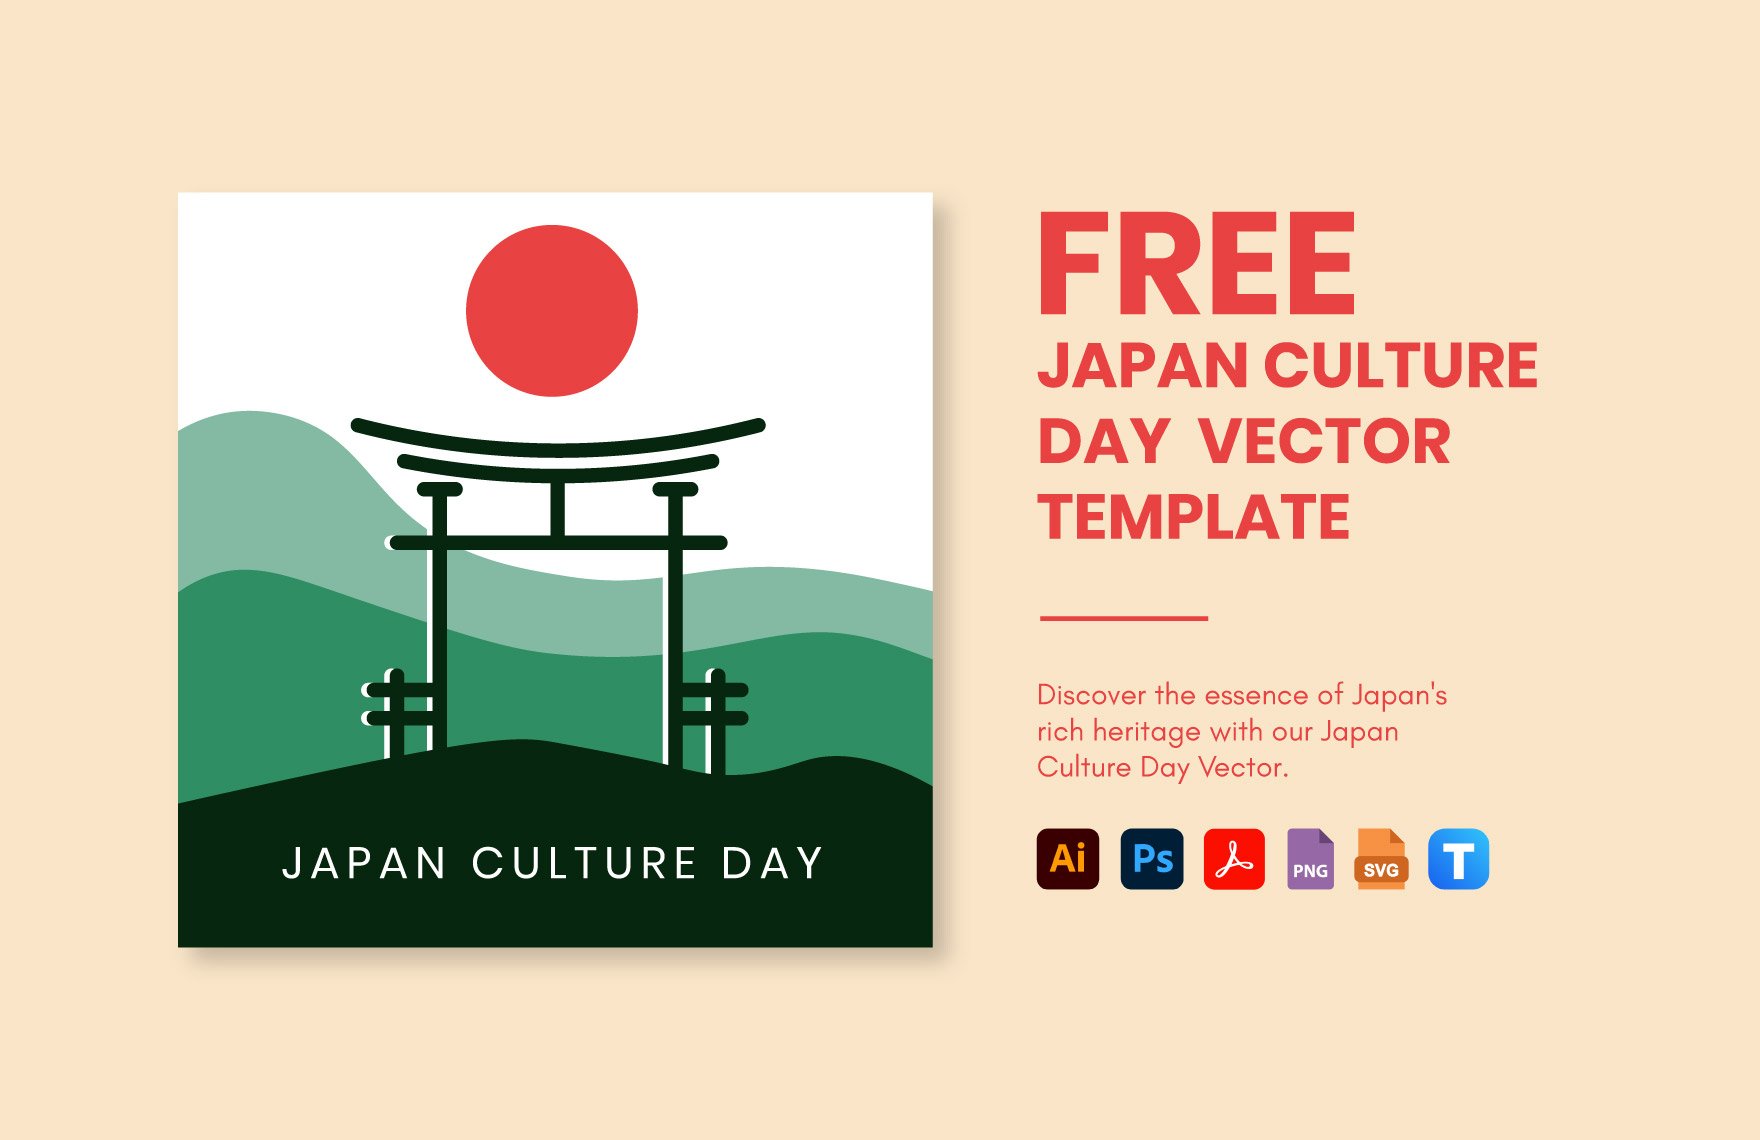 Japan Culture Day Vector in PDF, Illustrator, PSD, SVG, PNG